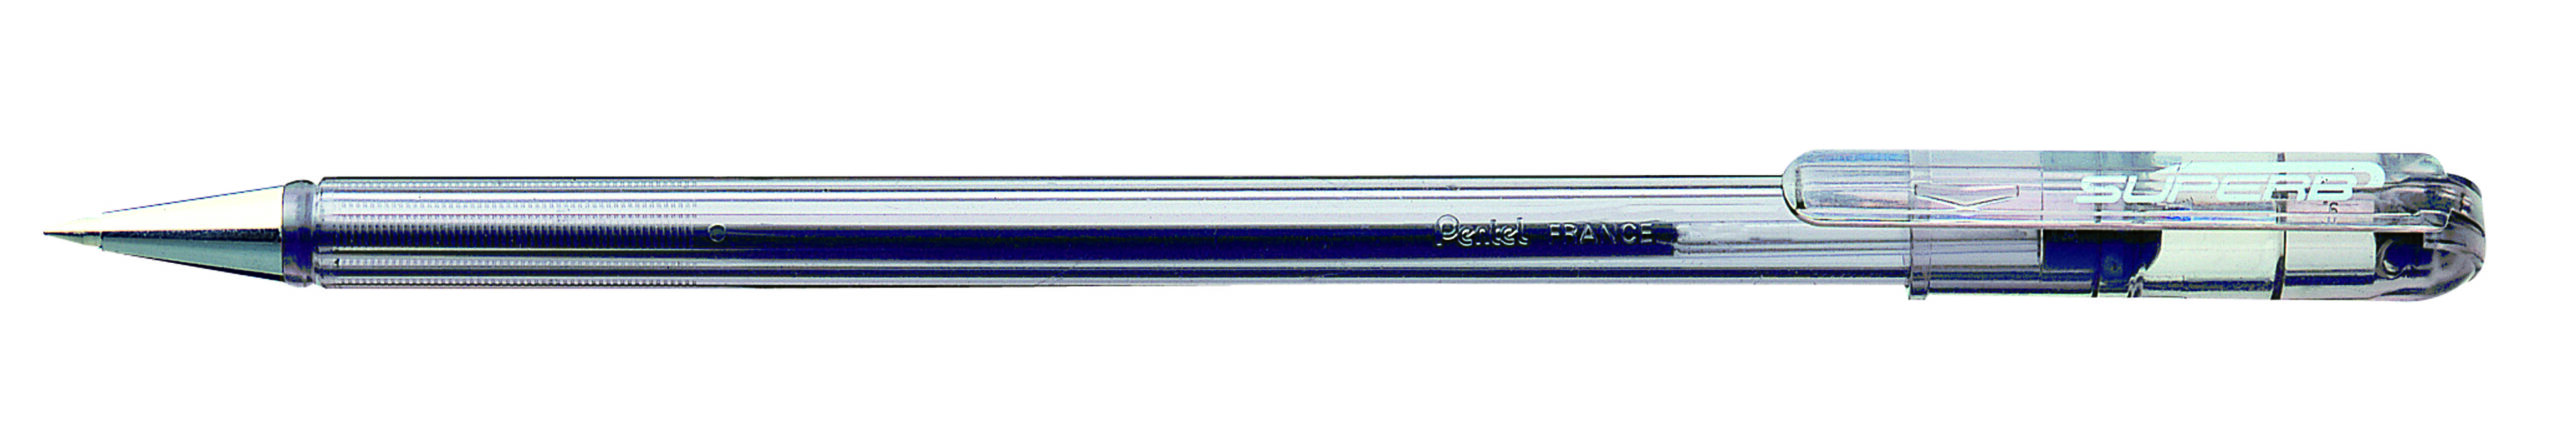 Penna Sfera Super B Bk77 Nero 0 7mm Pentel Bk77a 3474370077011